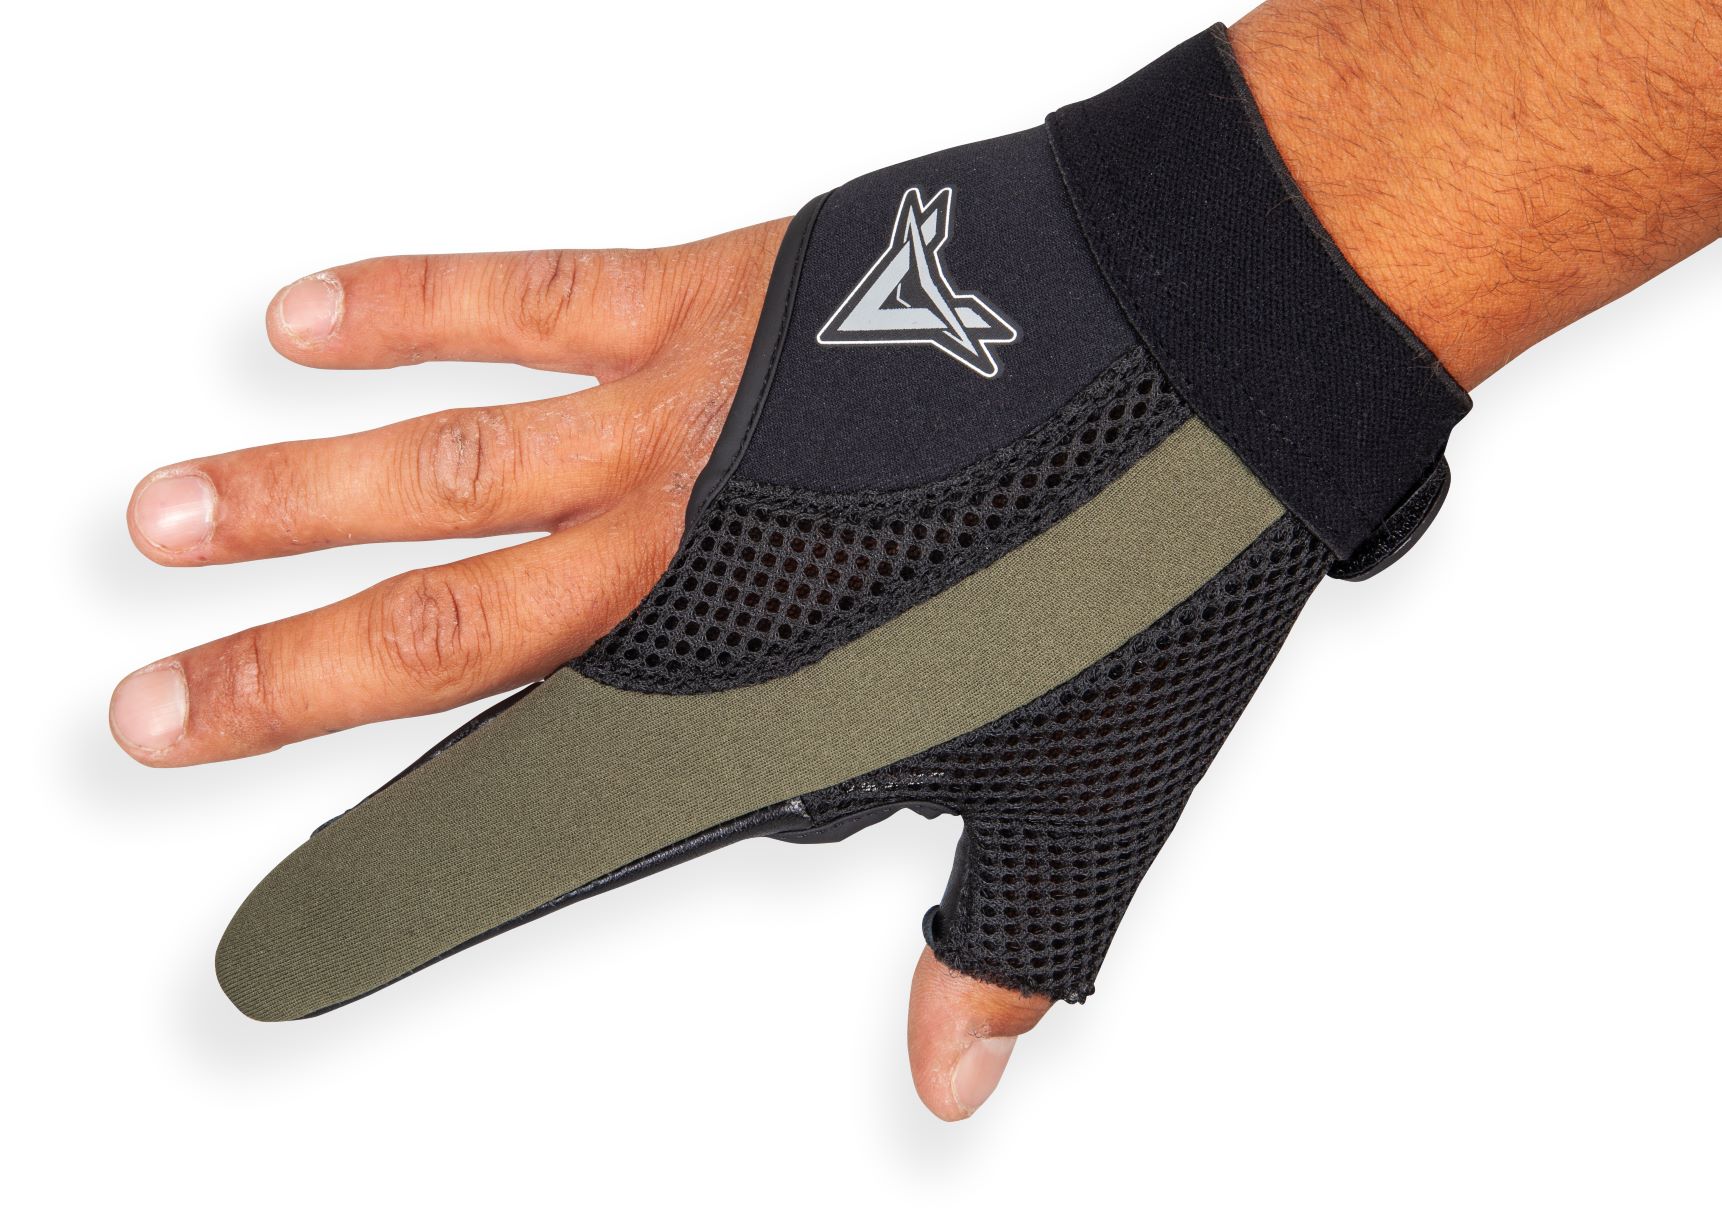 Anaconda rukavice Profi Casting Glove, pravá, vel. M-7155051